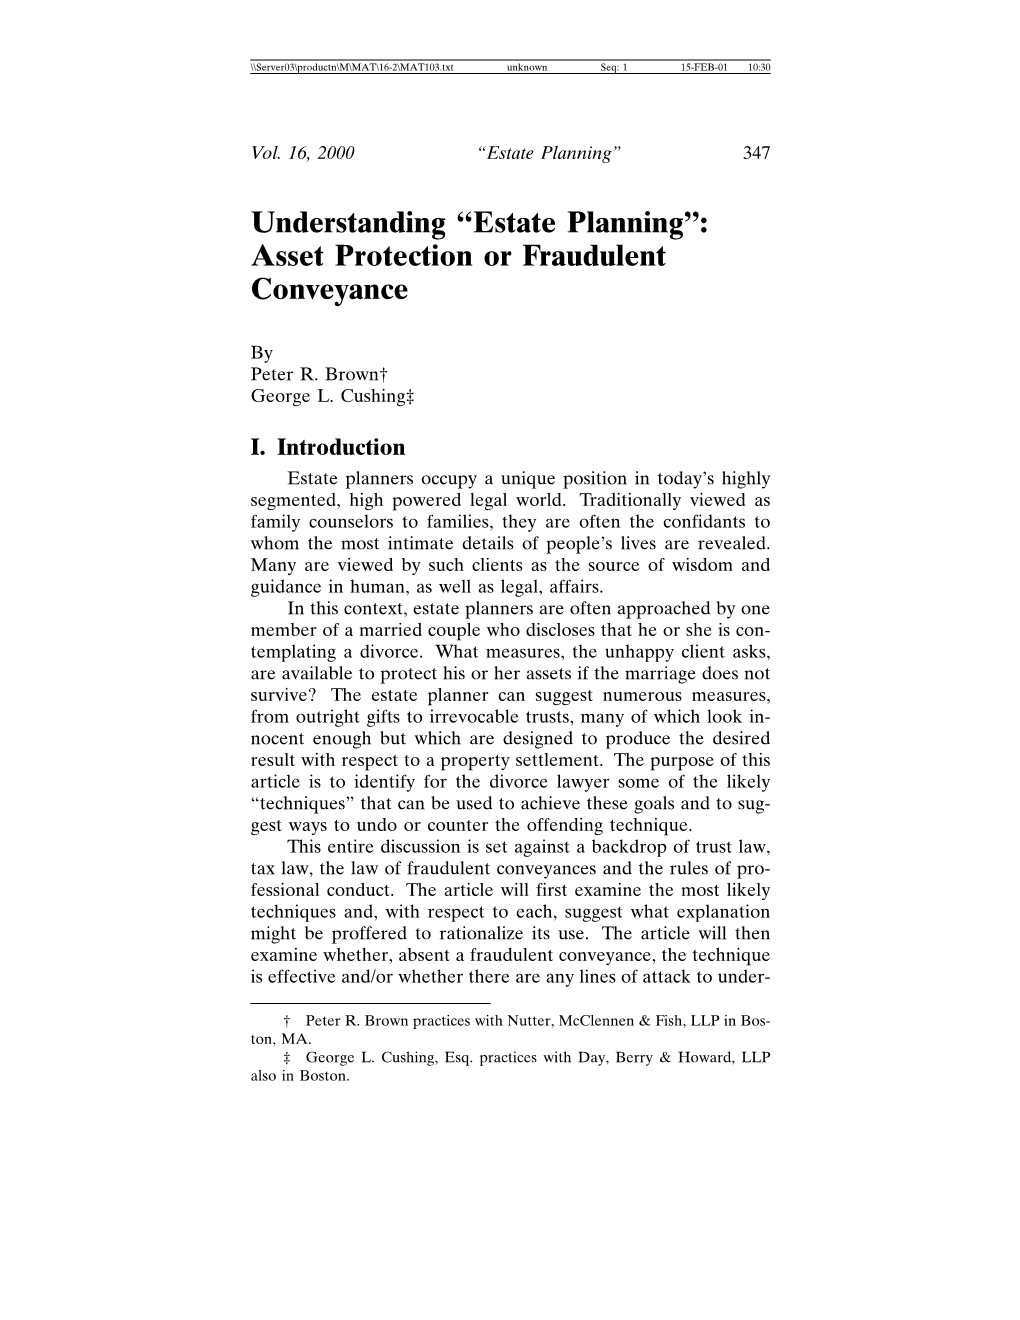 Estate Planning” 347